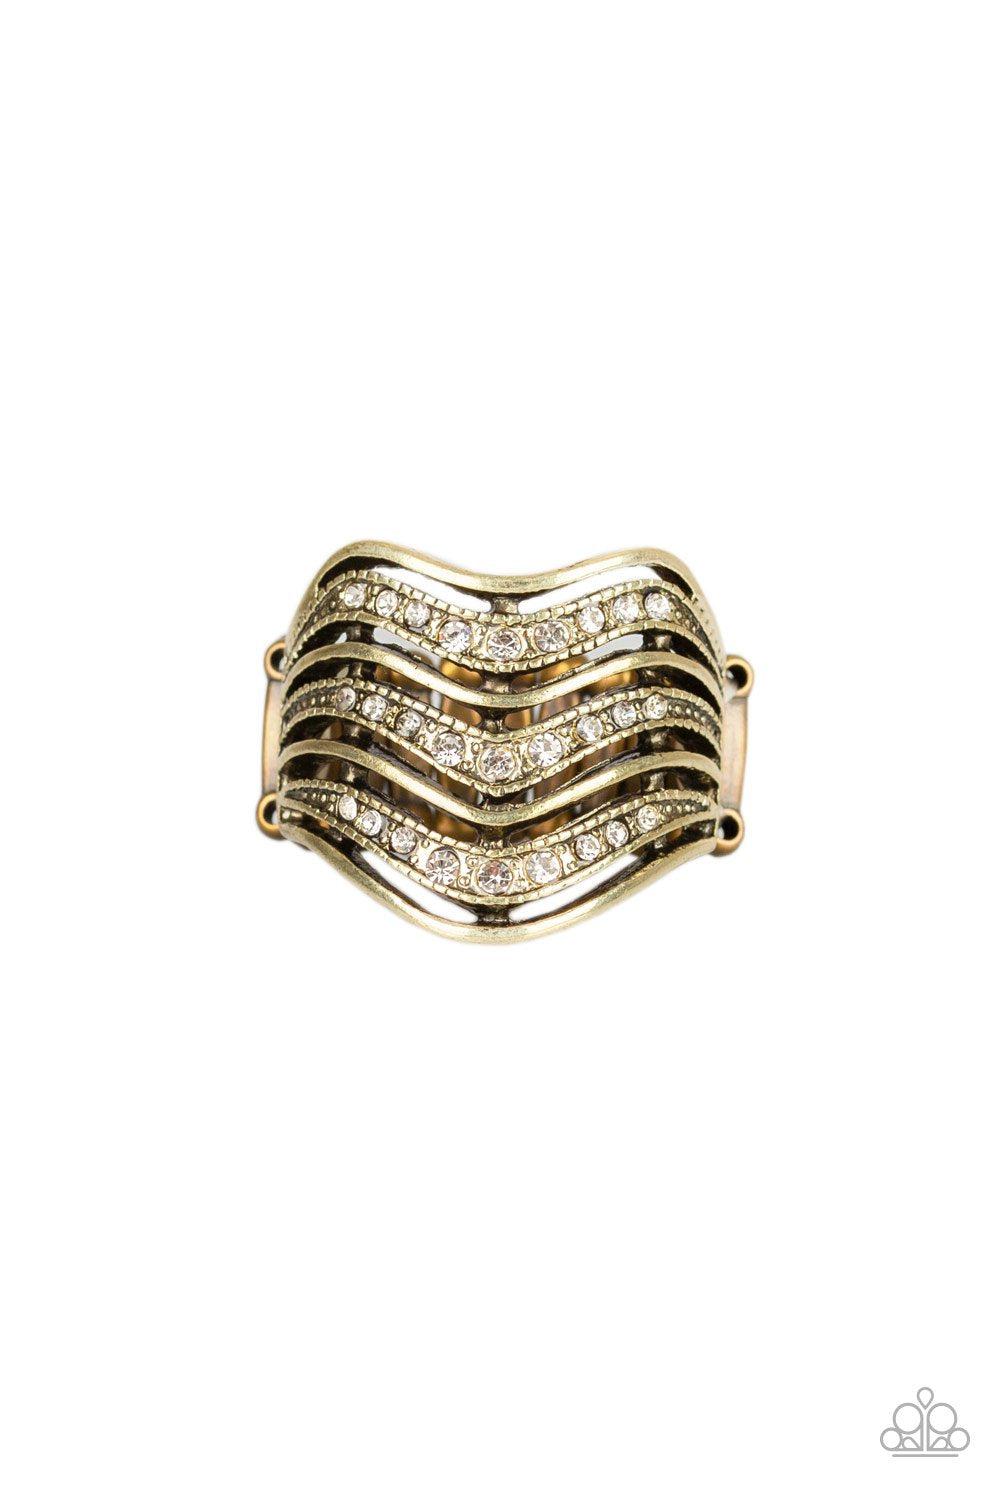 Fashion Finance Brass and Rhinestone Ring - Paparazzi Accessories-CarasShop.com - $5 Jewelry by Cara Jewels